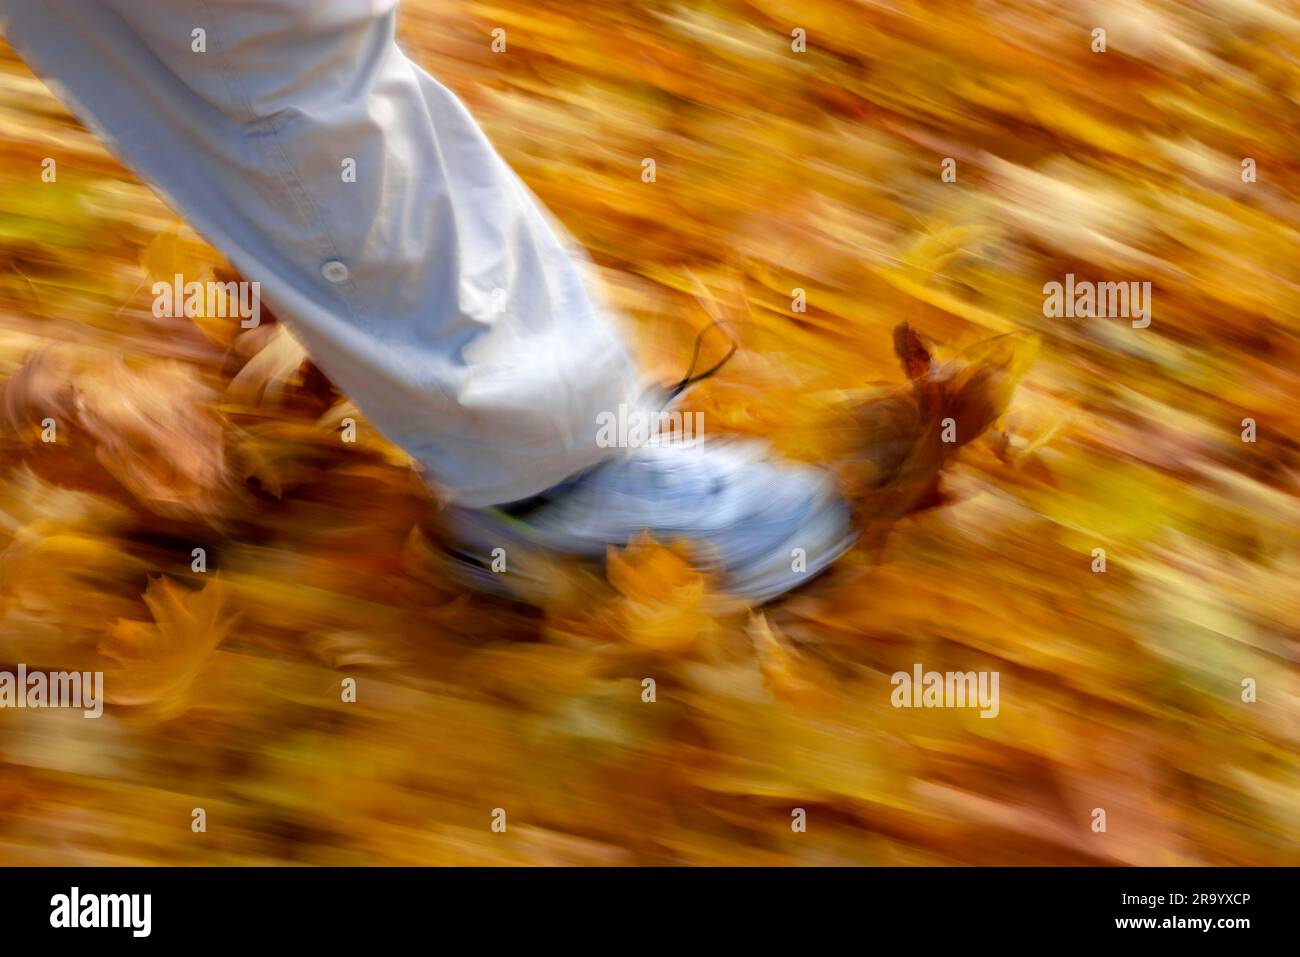 Close-up blurred shot of human leg walking on autumnal leaves Stock Photo